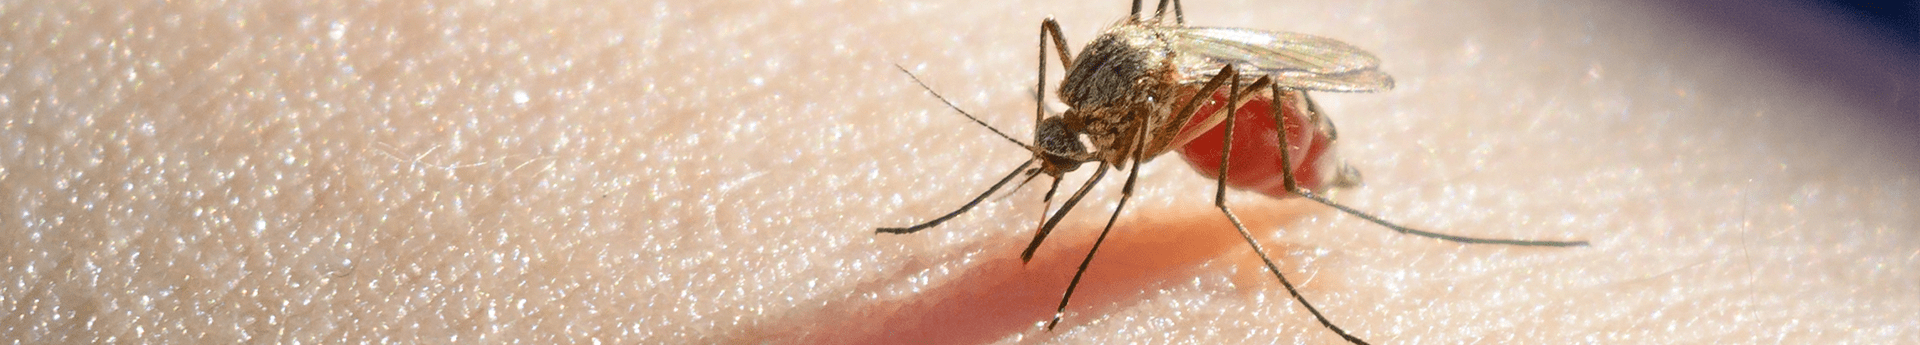 mosquito feeding on human arm